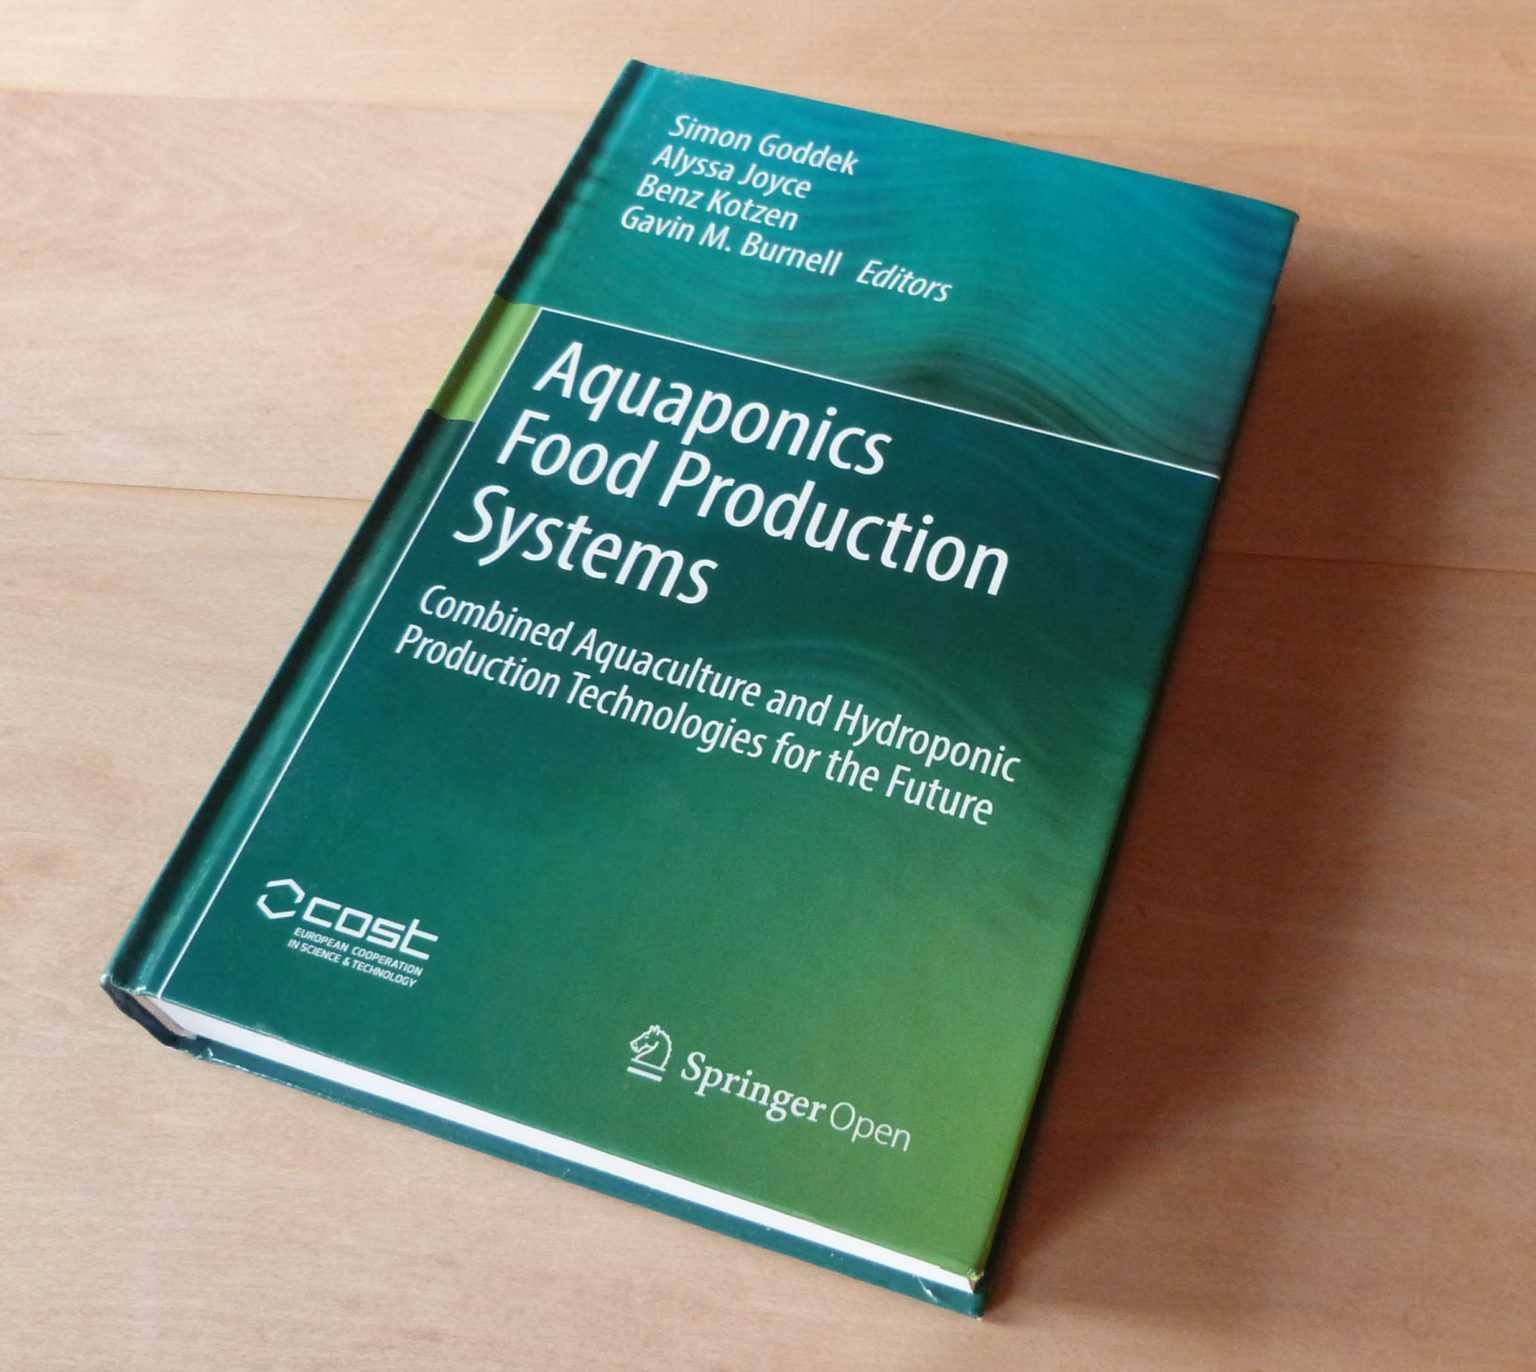 Buch zur Aquaponik-Forschung "Aquaponics Food Production Systems"